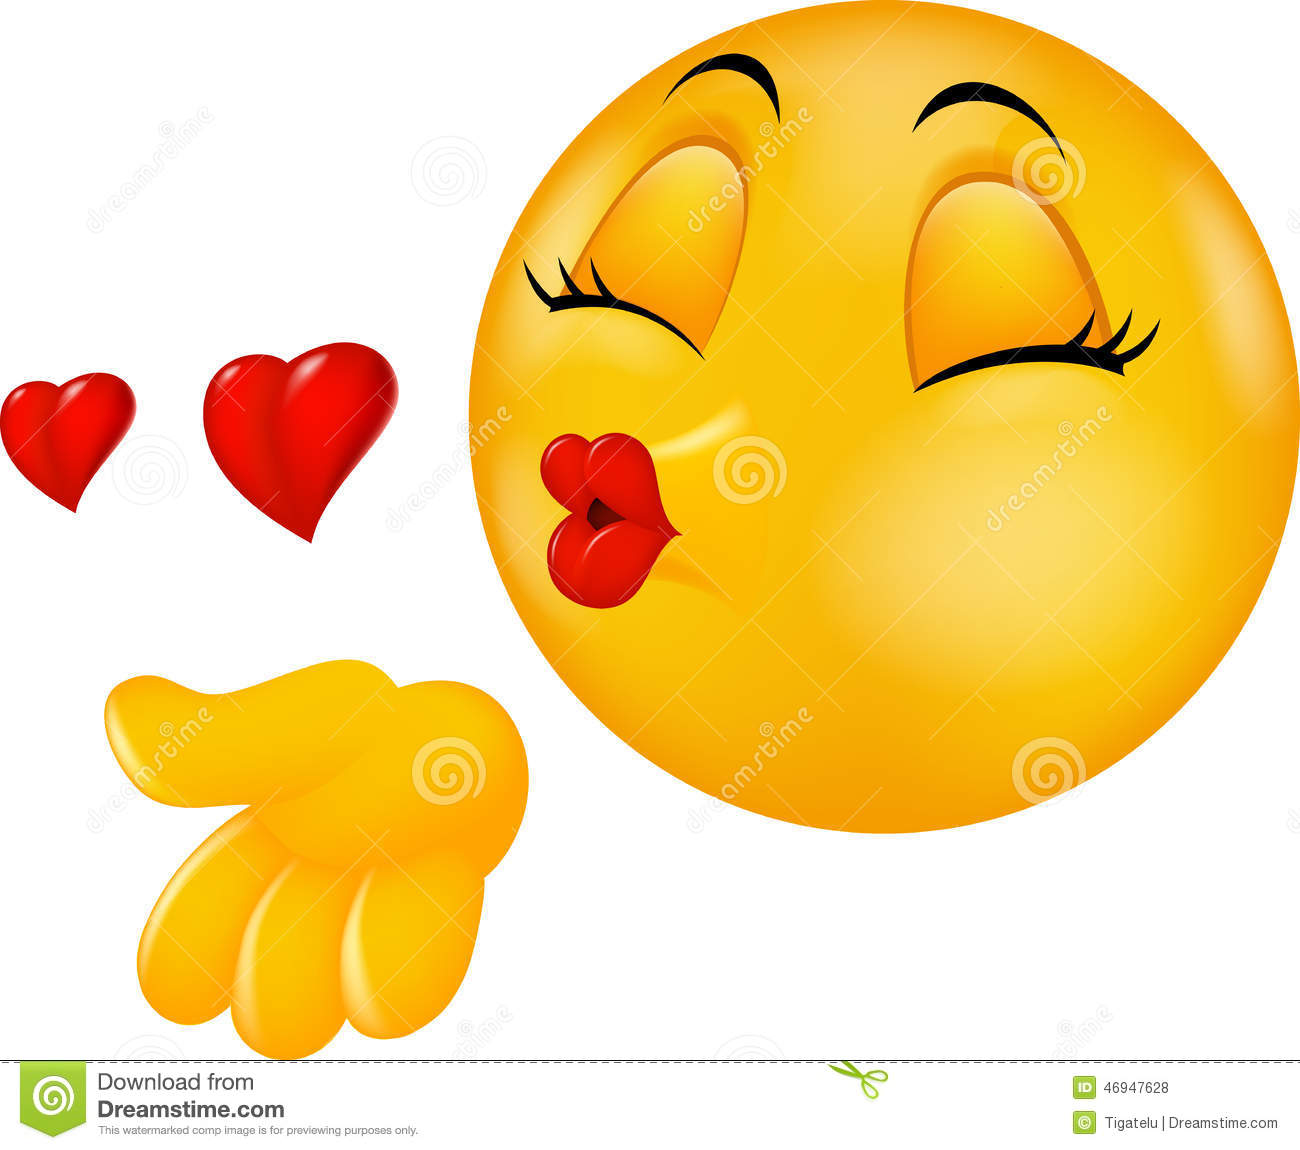 cartoon-round-kissing-face-emoticon-making-air-kiss-illustration-46947628.jpg